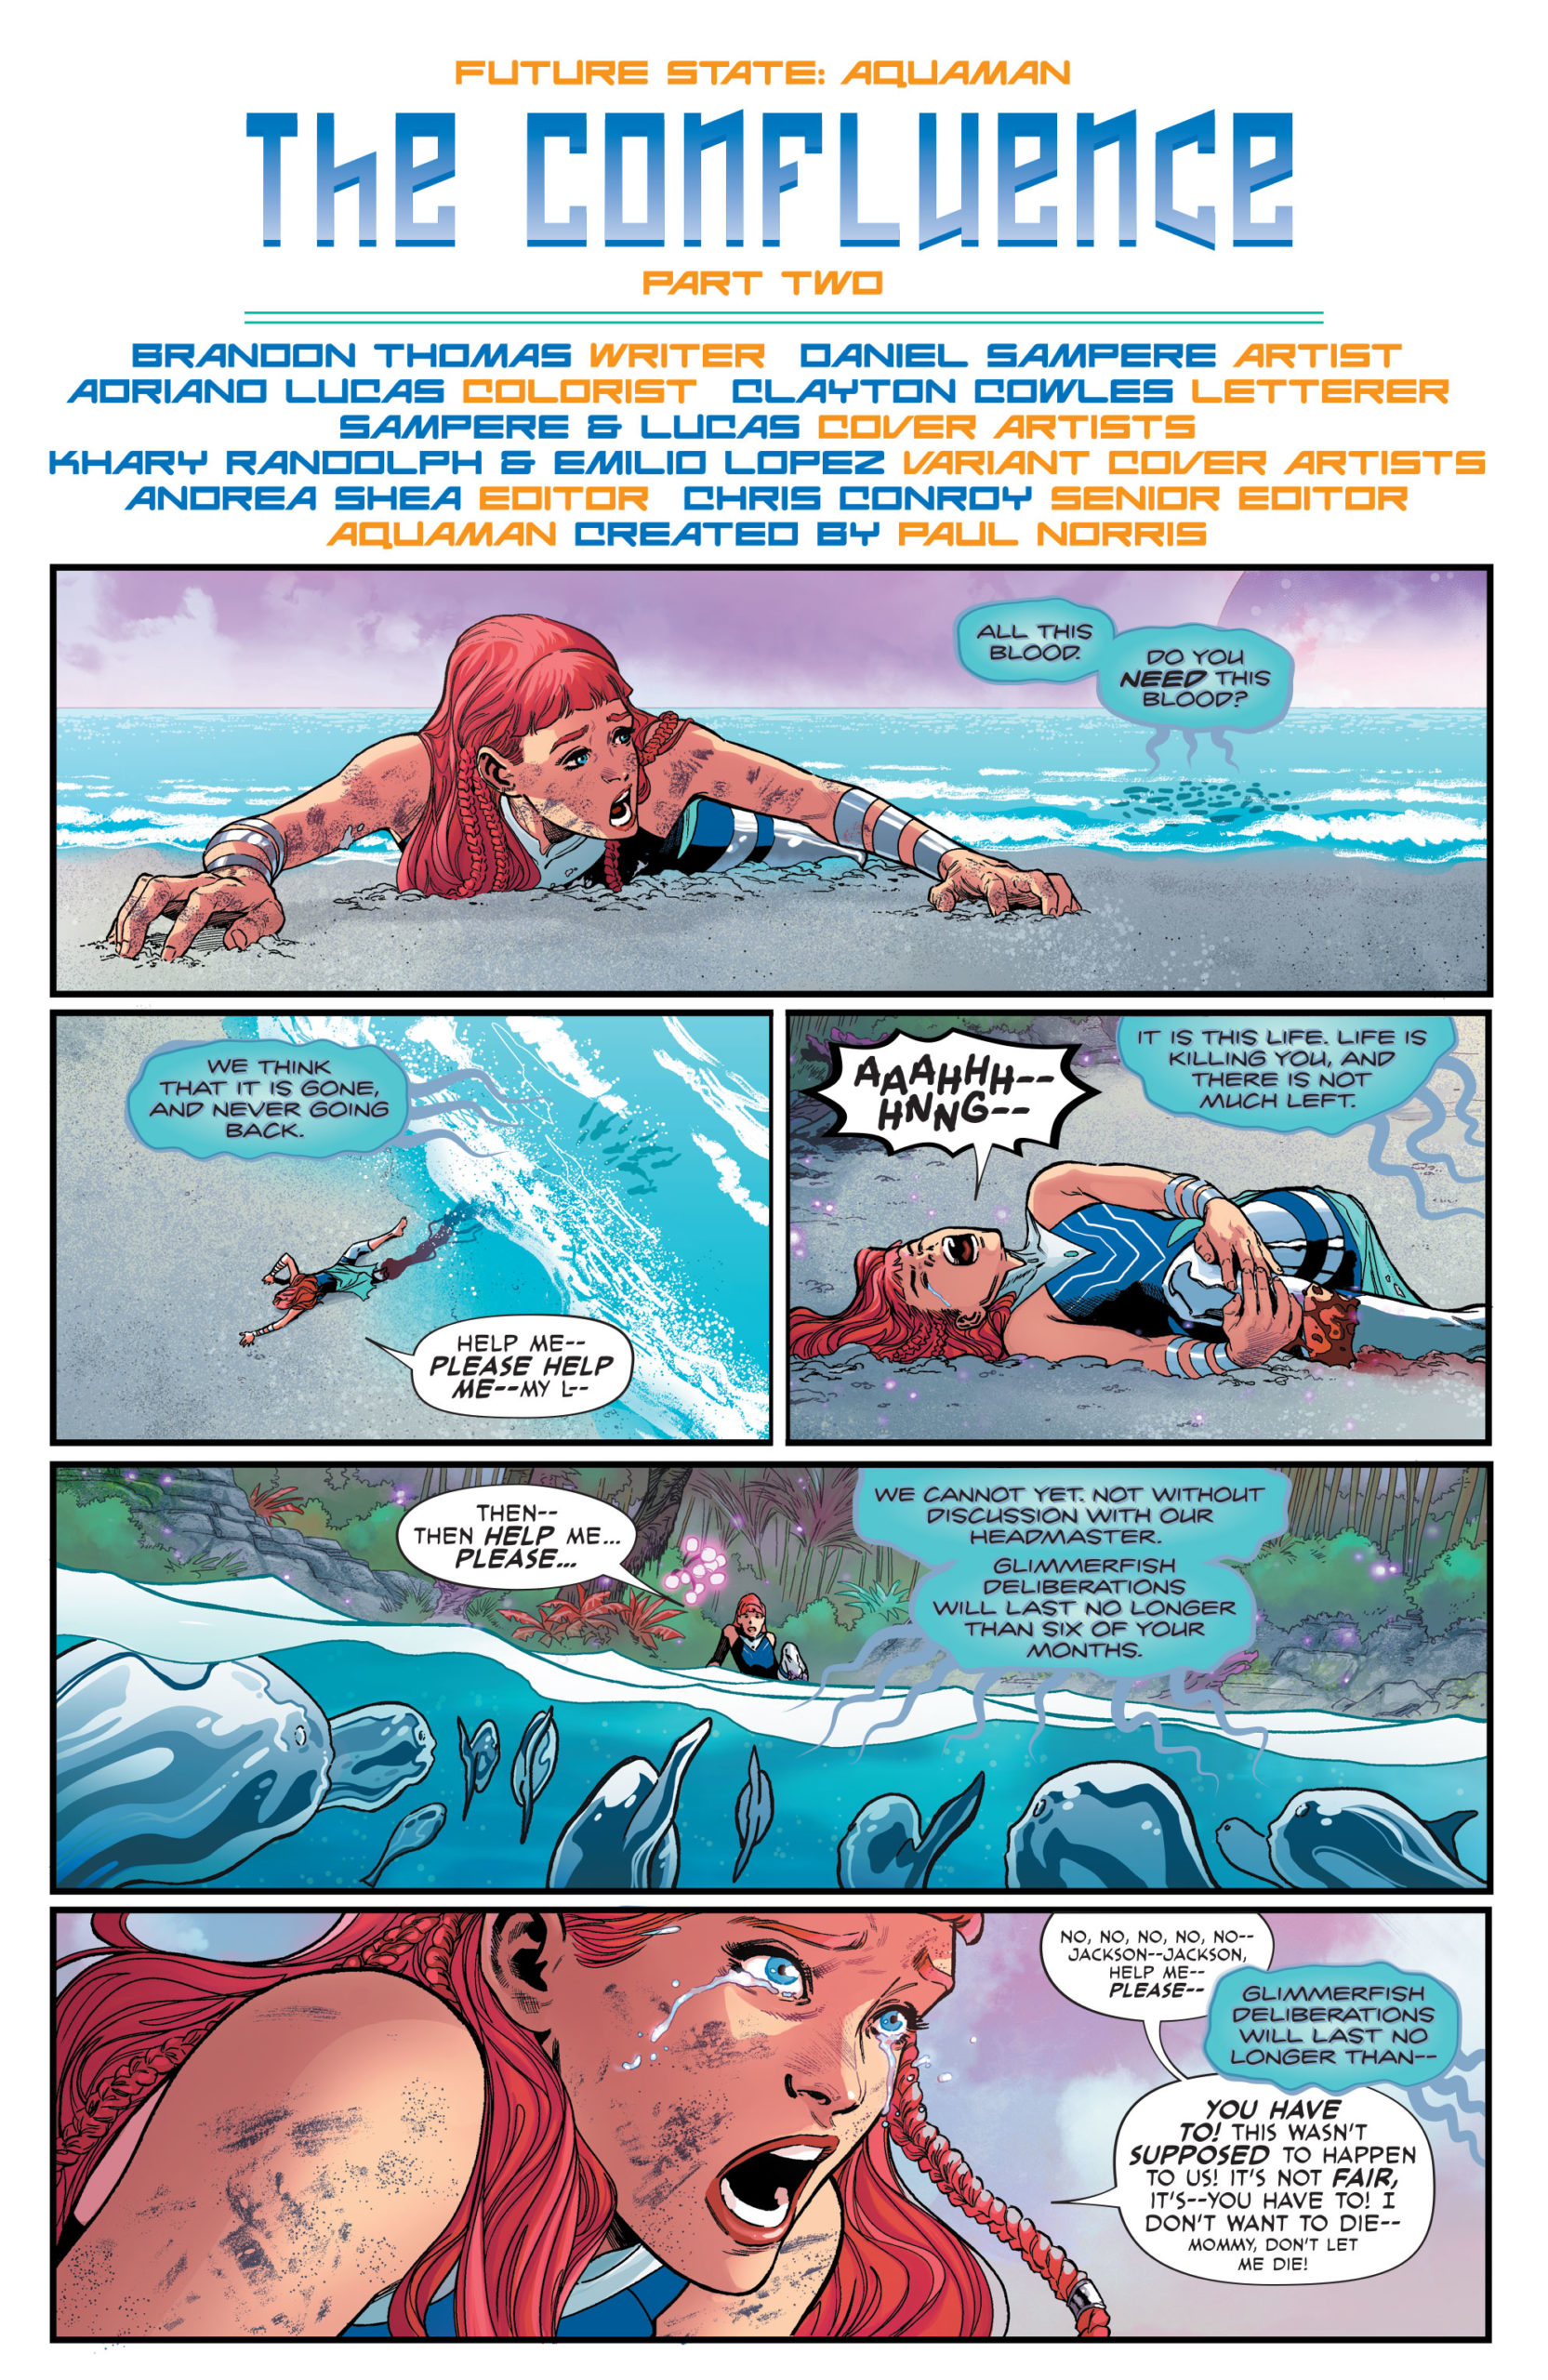 Future State: Aquaman #2 DC Comics News